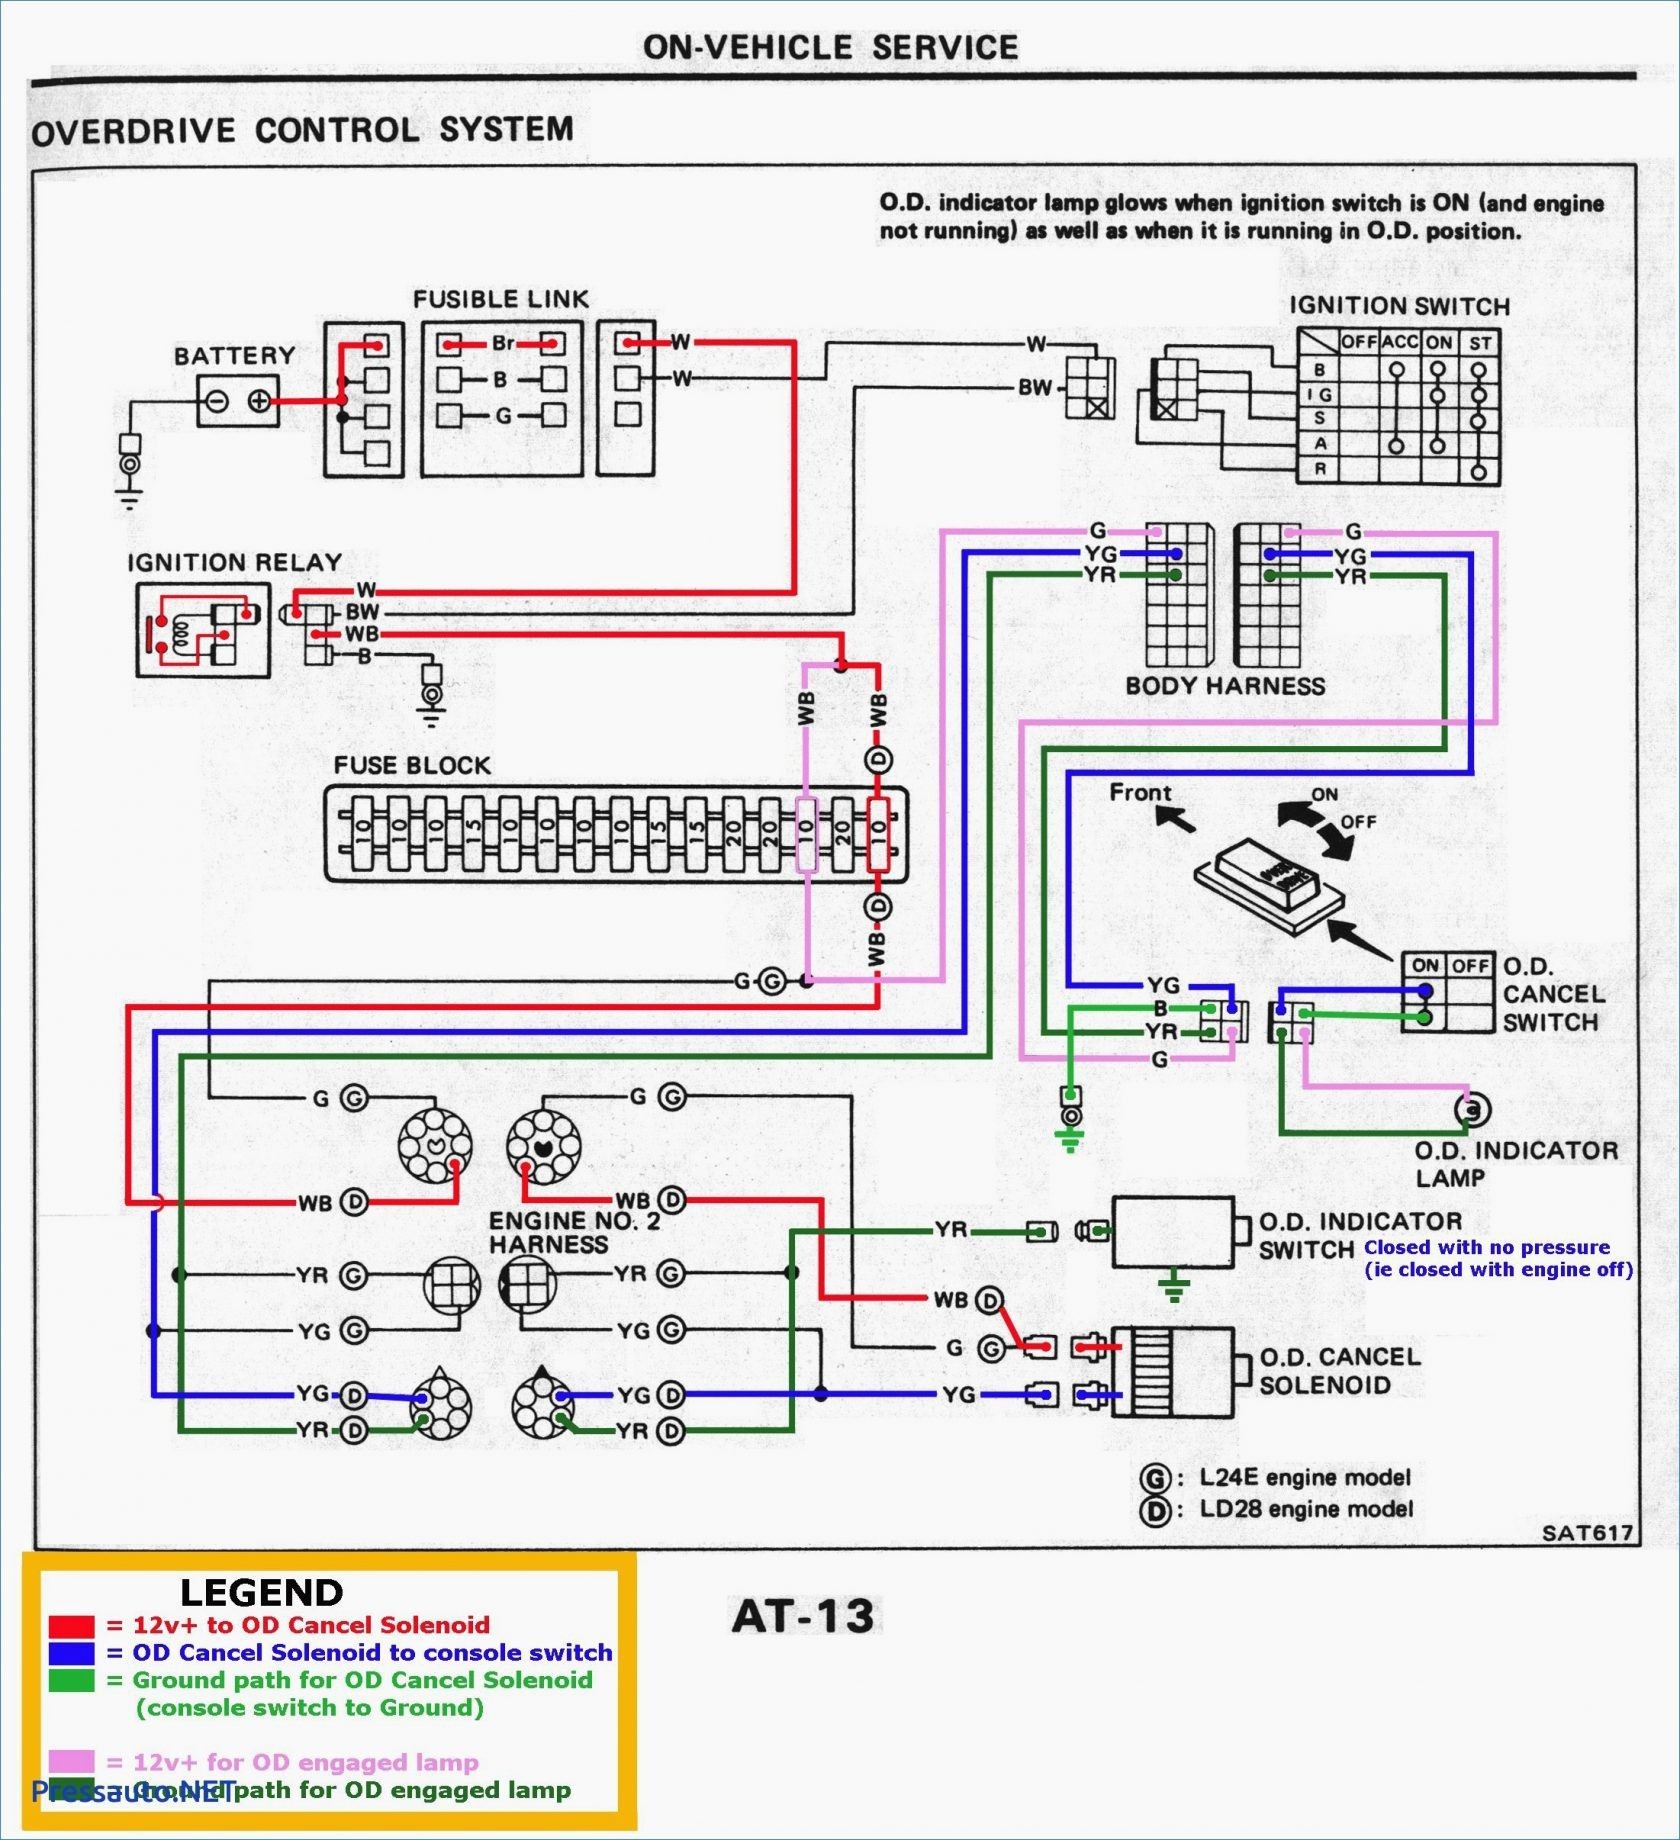 Auto Engine Diagram 2001 Mitsubishi Eclipse Wiring Diagram Rate Caravan Wiring Diagram Of Auto Engine Diagram